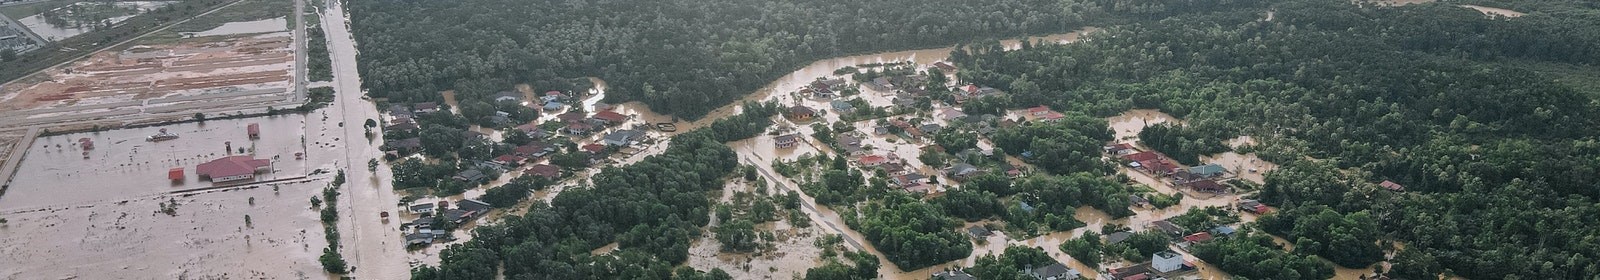 KZN floods - The impact on properties 